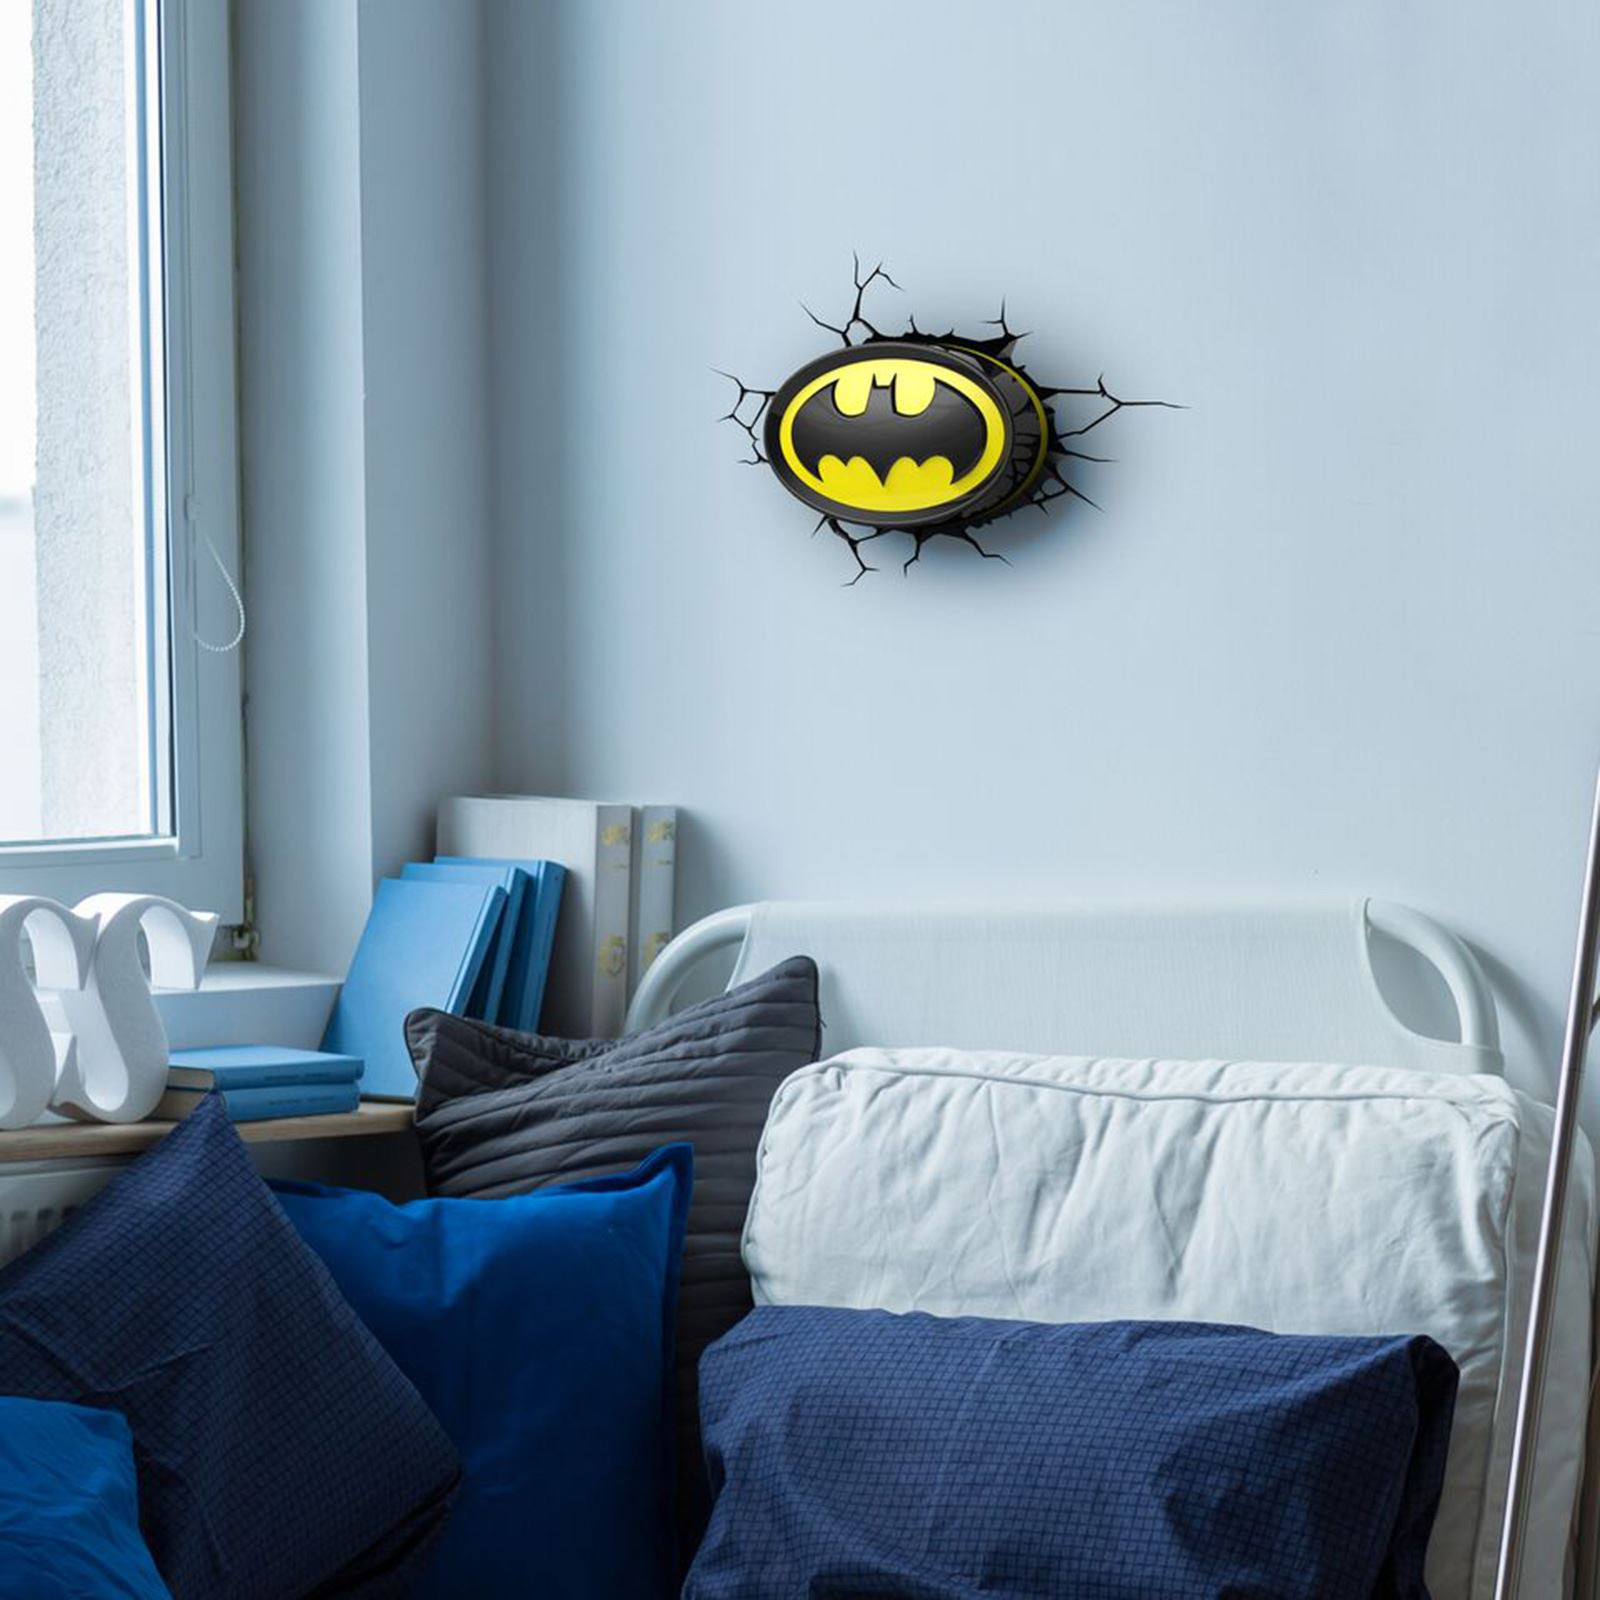 Batman Bedroom Wallpaper
 BATMAN LOGO 3D LED WALL NIGHT LIGHT NEW OFFICIAL BEDROOM